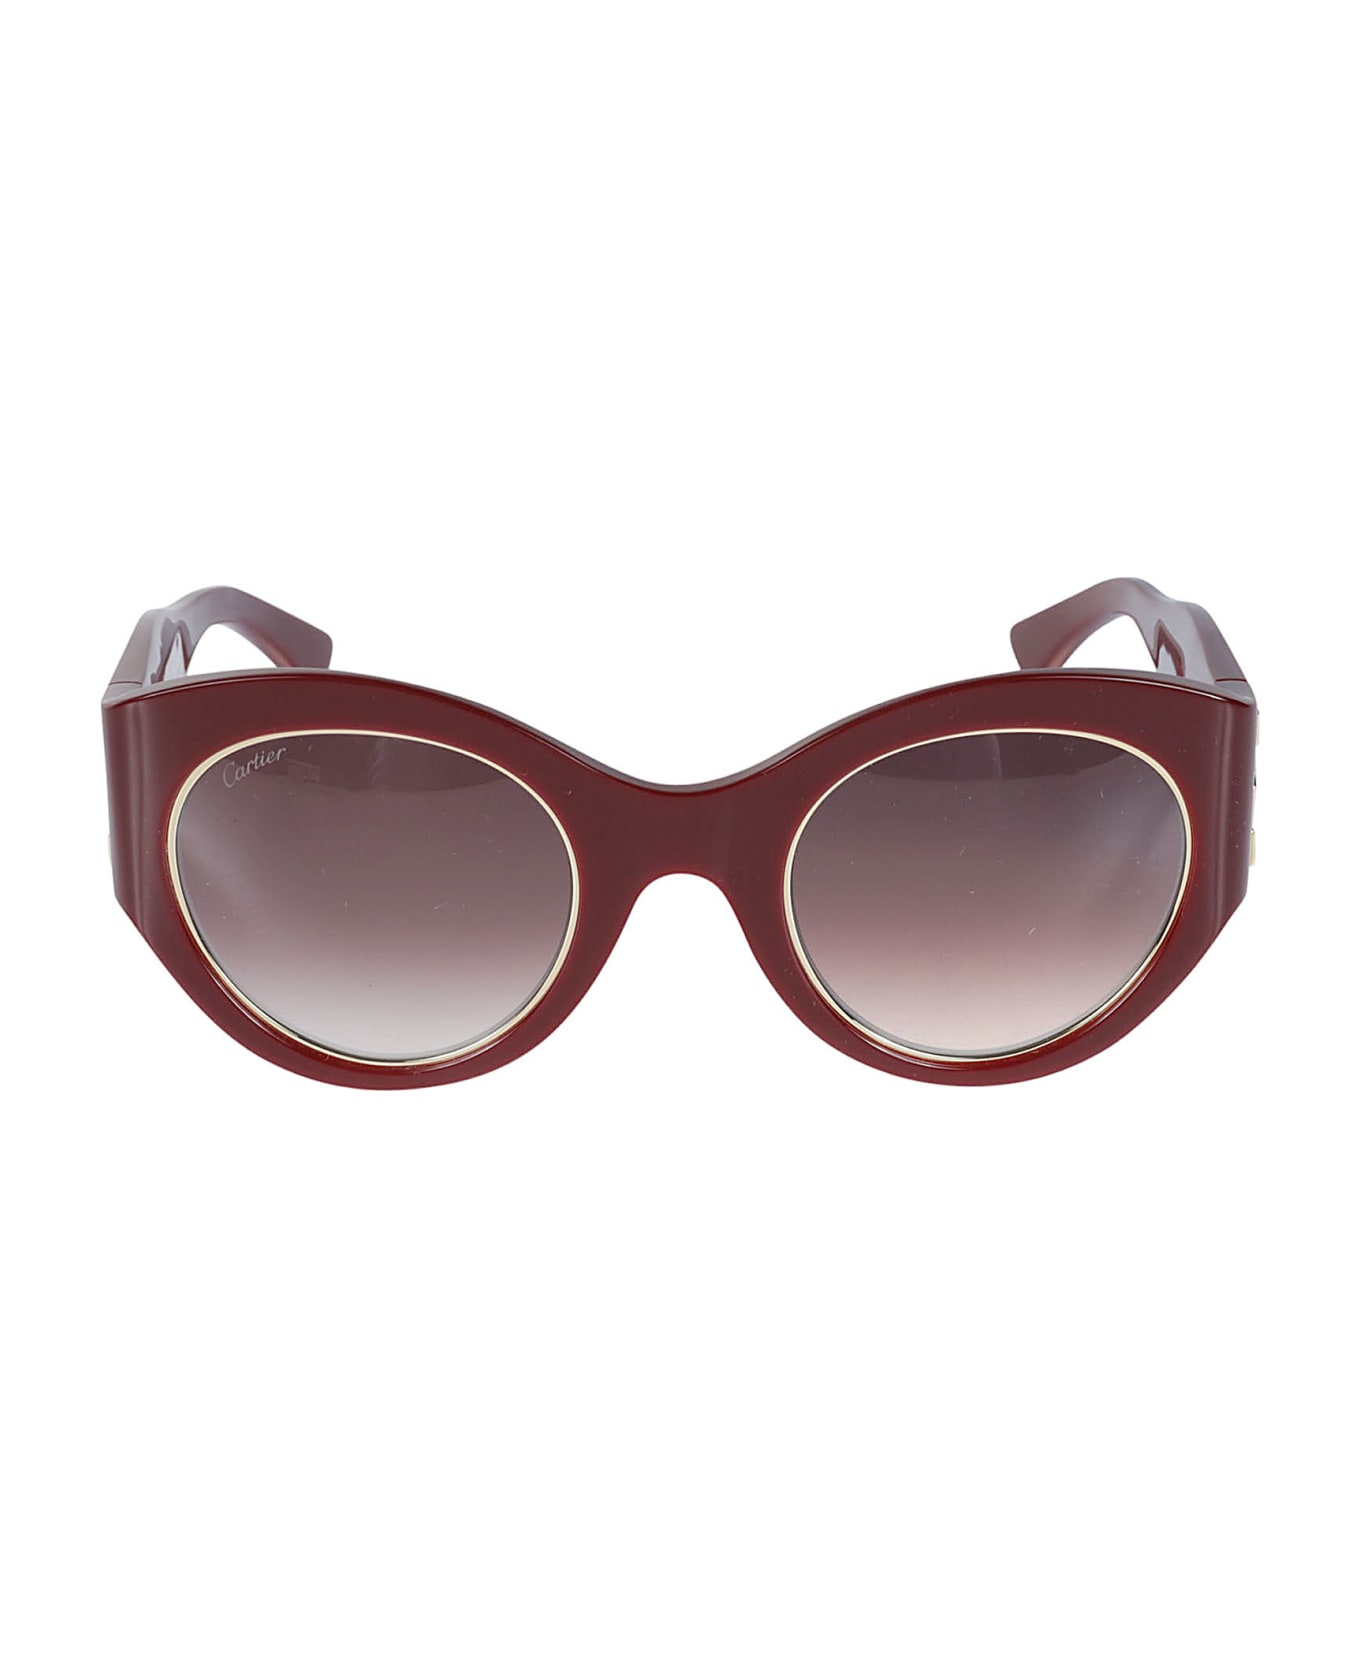 Cartier Eyewear Thick Round Sunglasses - 003 burgundy burgundy red サングラス